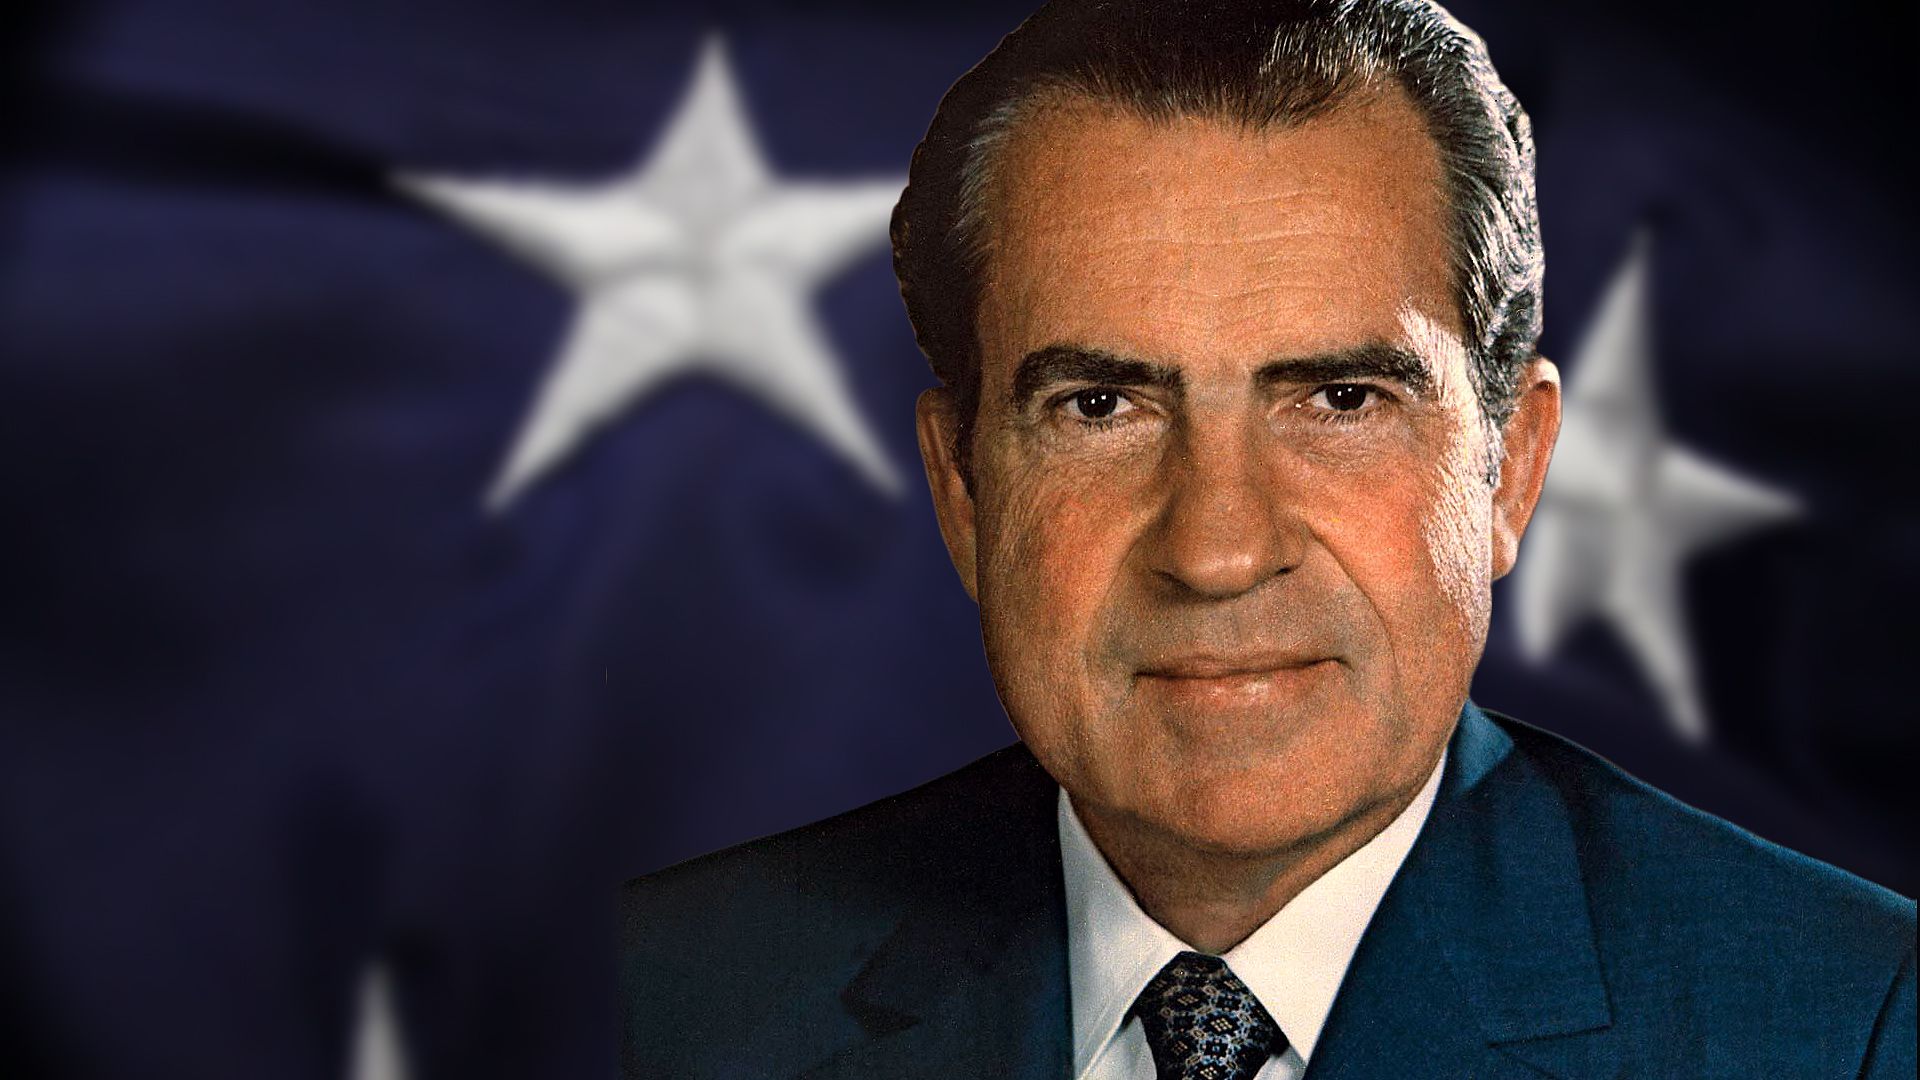 U.S. Pres. Richard M. Nixon's life and career examined